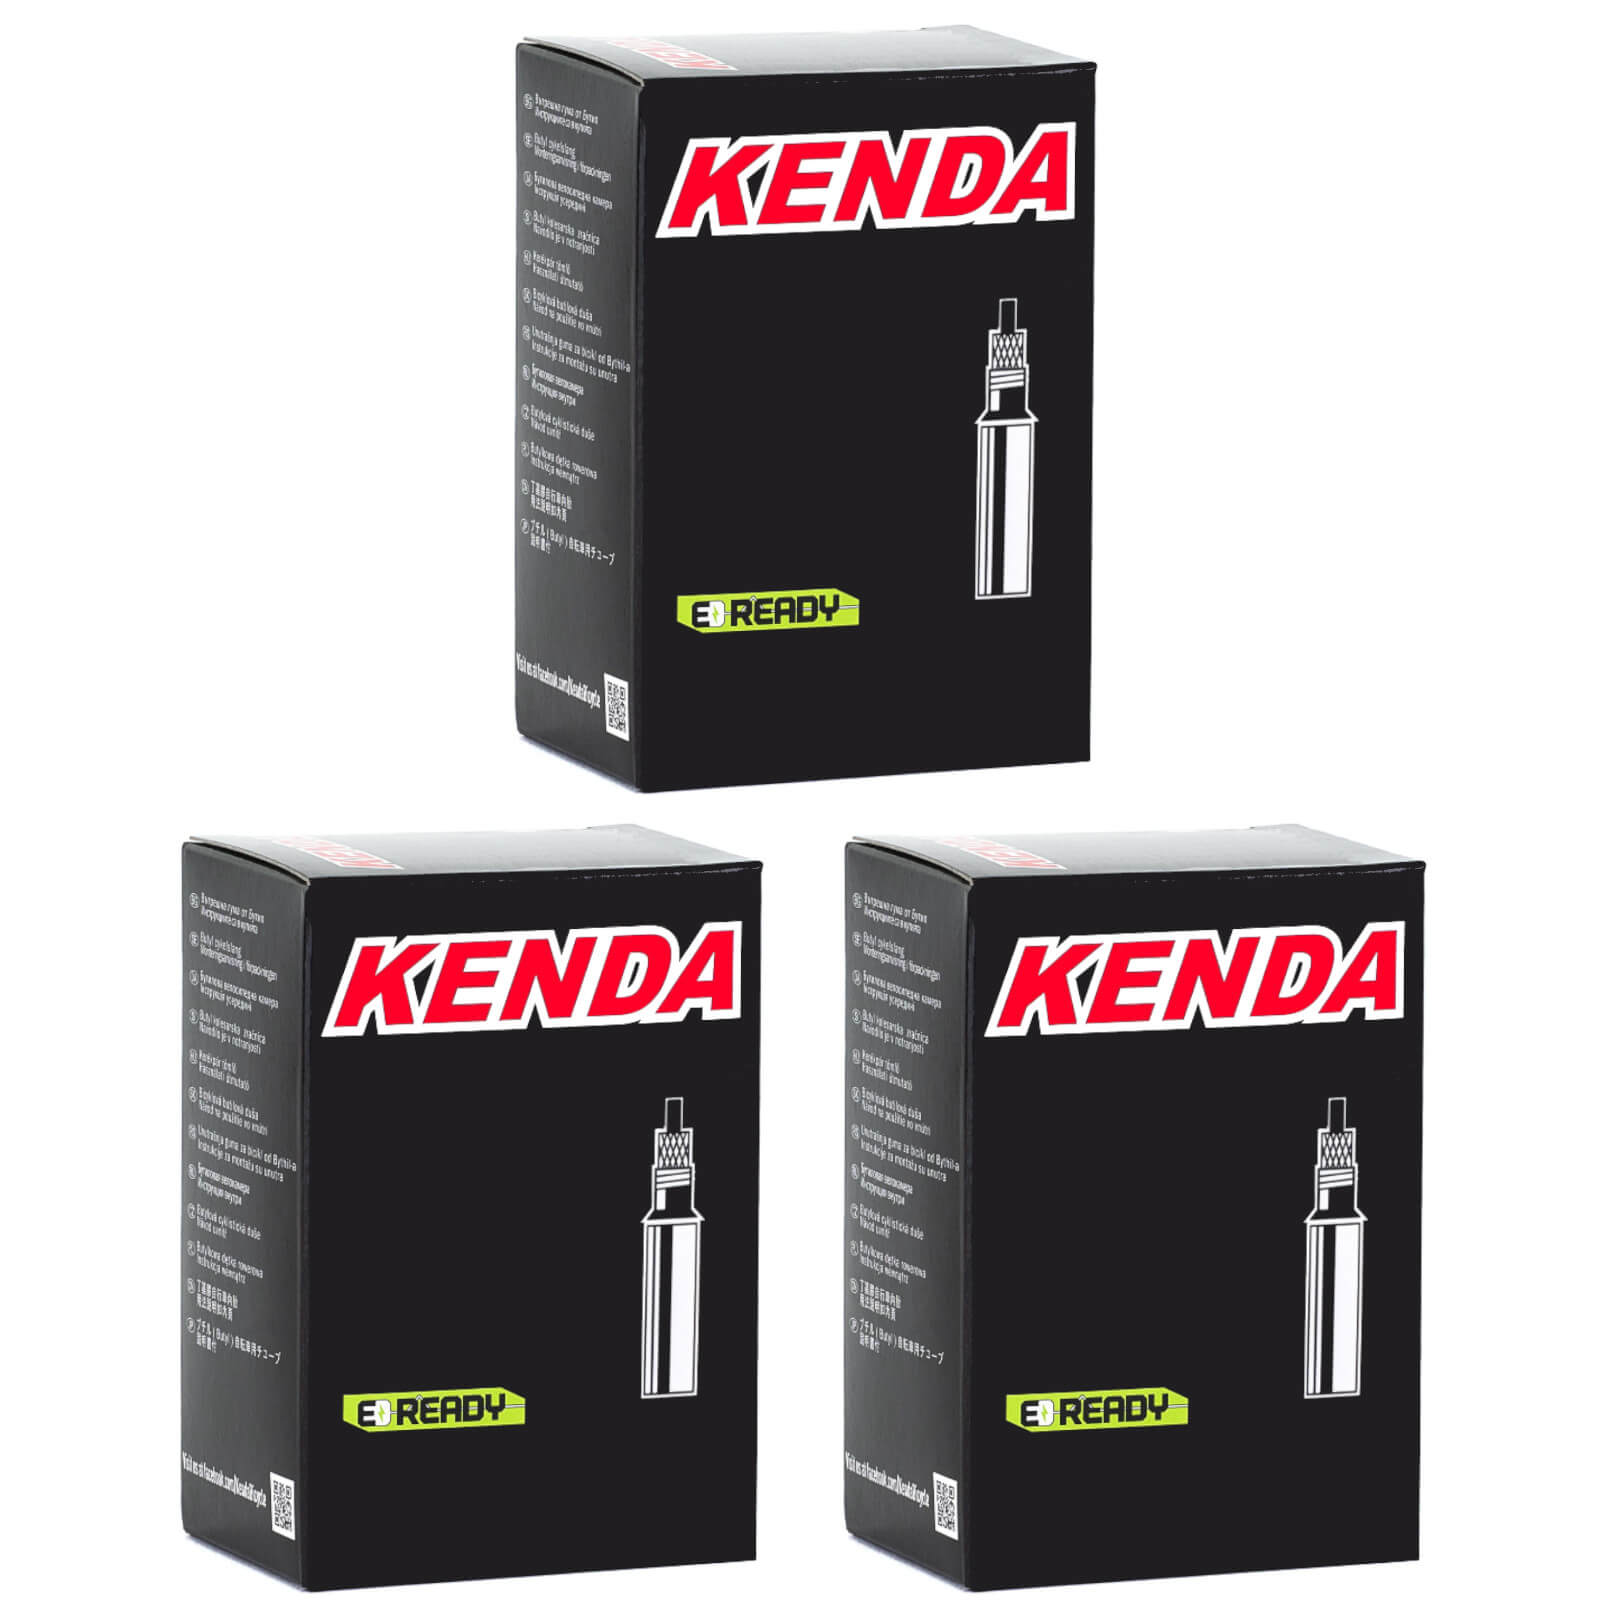 Kenda 27.5x1.25-1.5" 27.5 Inch Presta Valve Bike Inner Tube Pack of 3